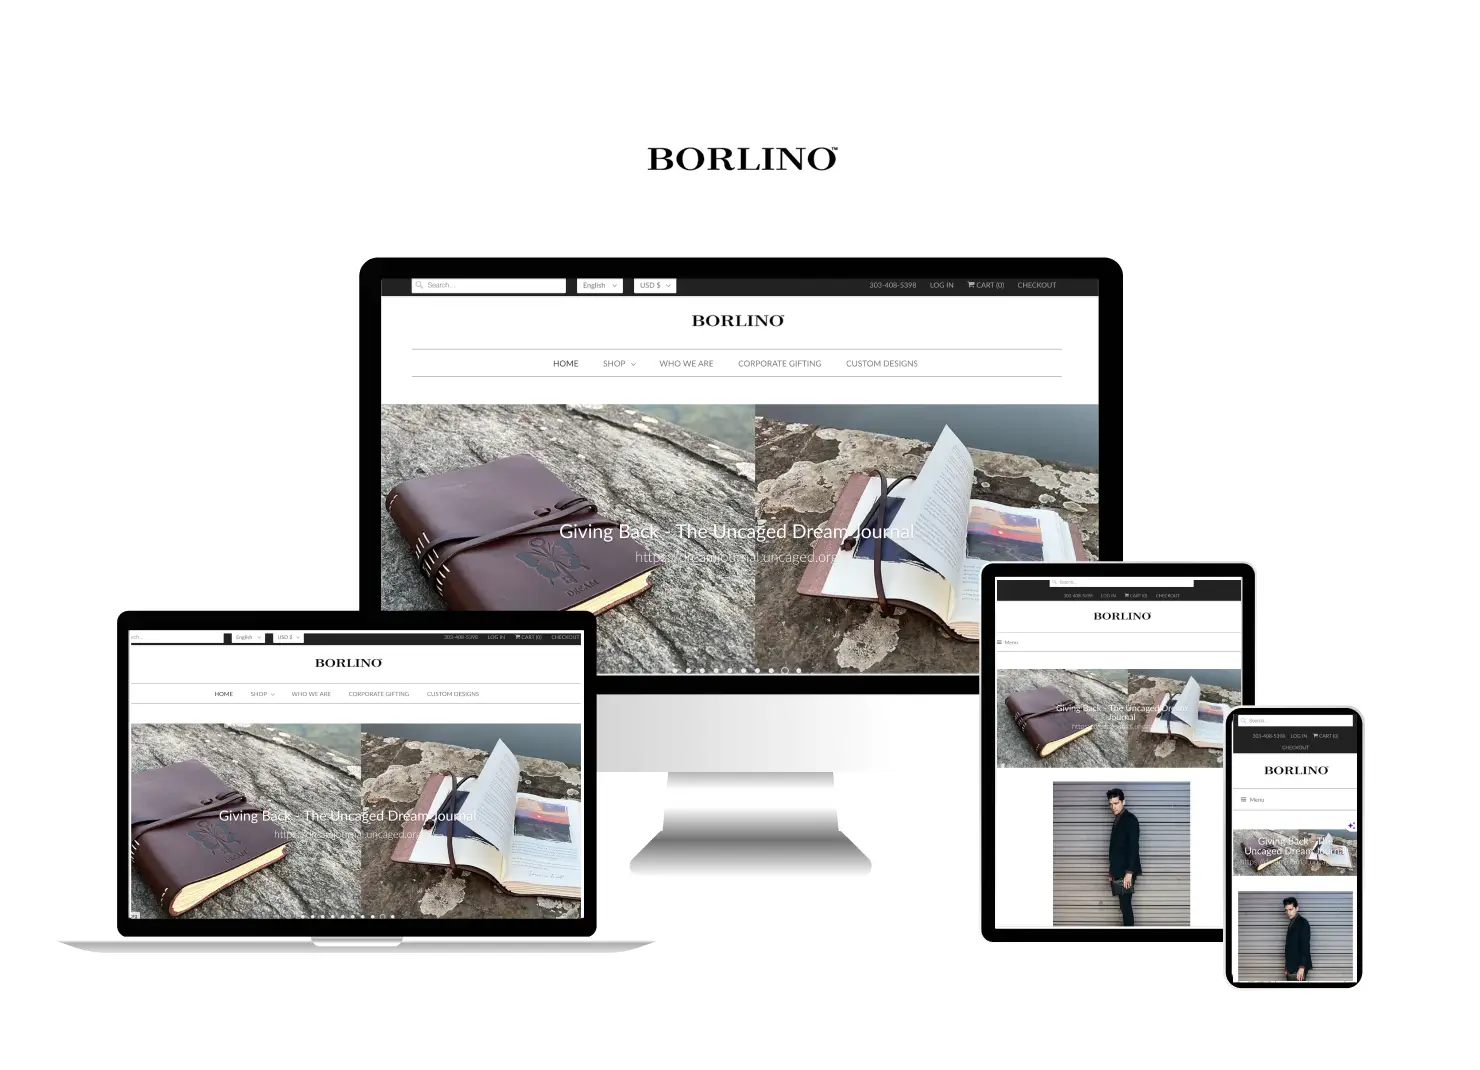 eCommerce website design for the luxury Italian leather brand